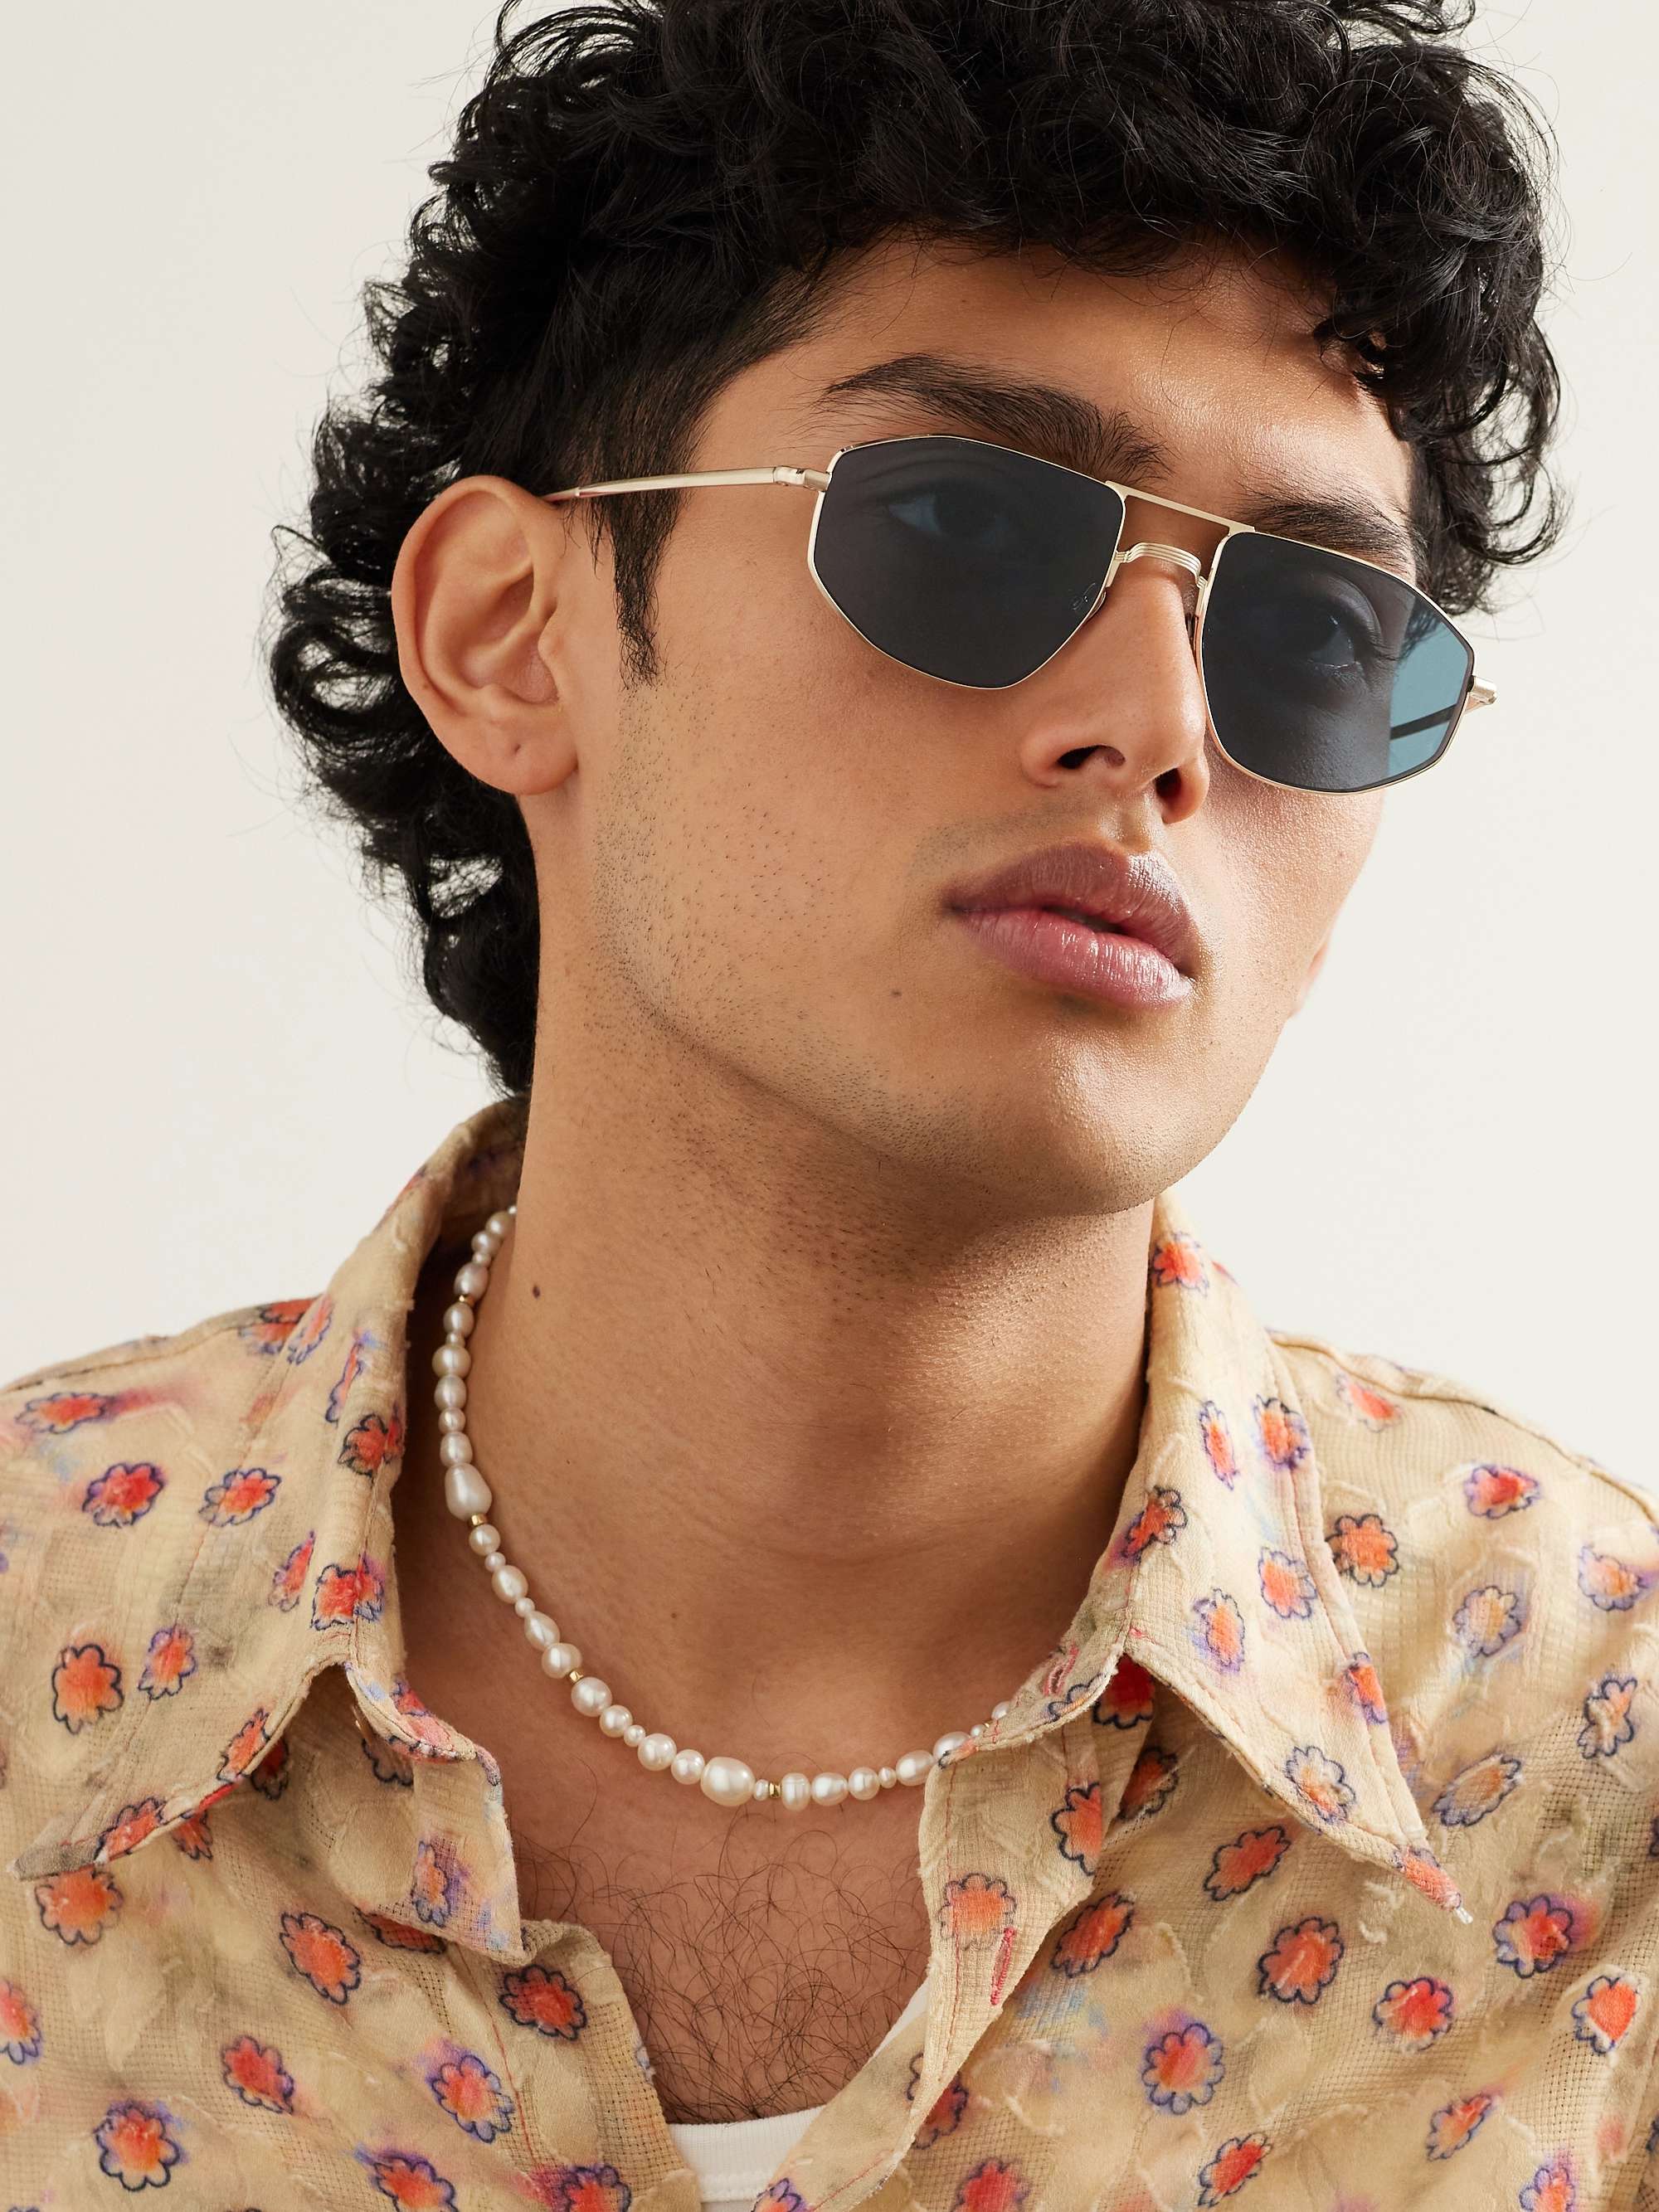 AHLEM Quai d'Orsay Hexagonal-Frame Gold-Tone Sunglasses